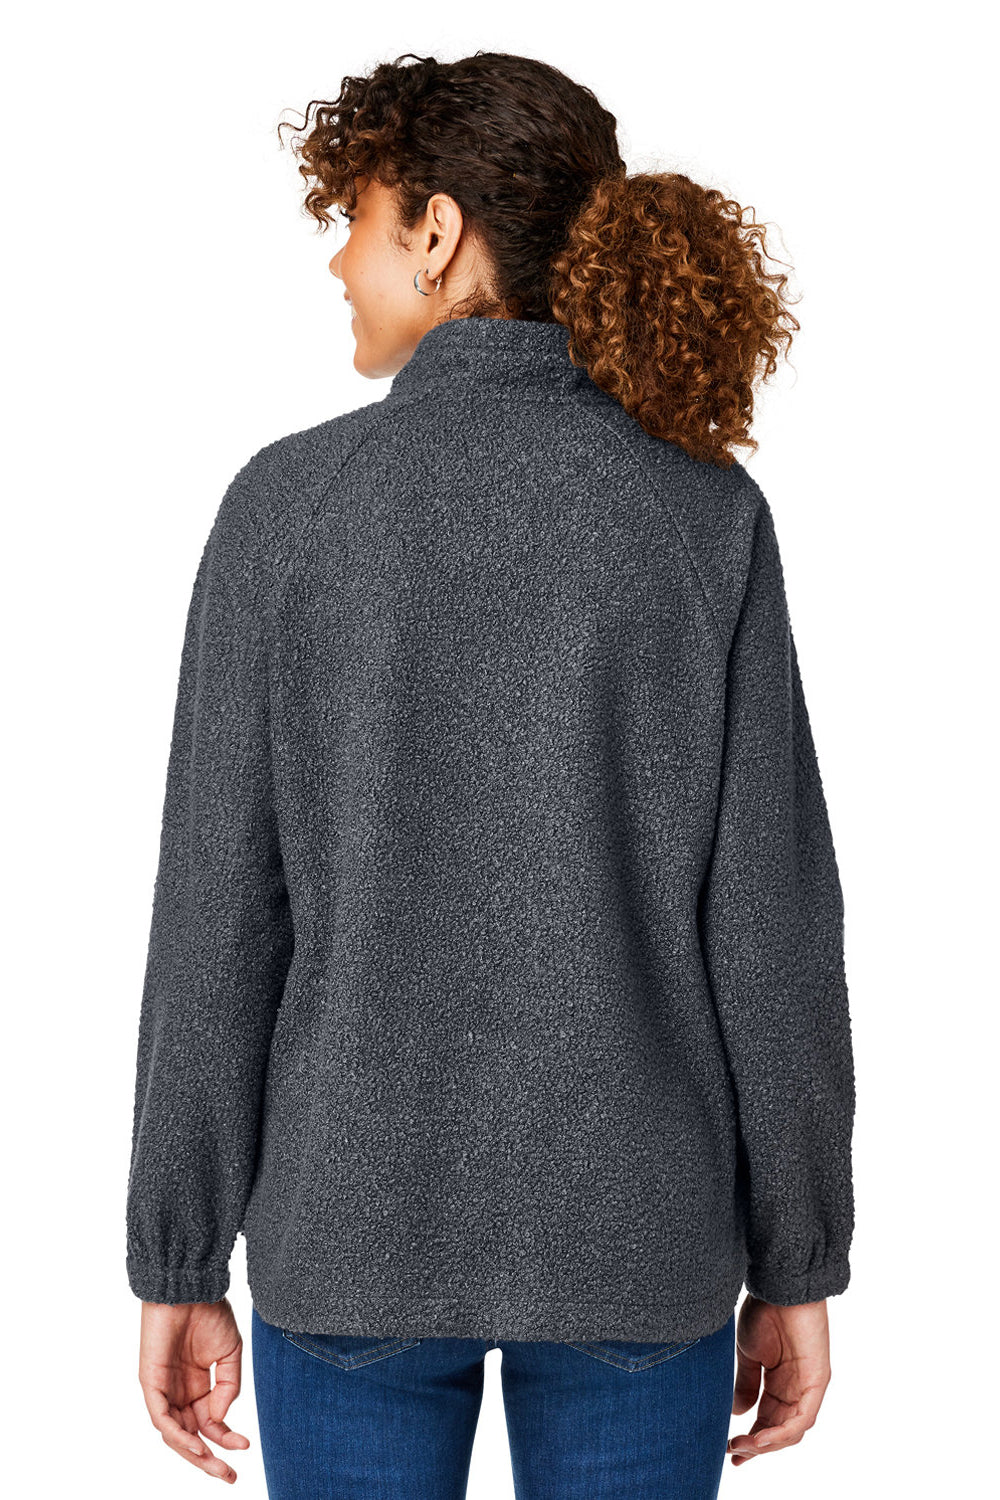 North End NE713W Womens Aura Sweater Fleece 1/4 Zip Sweatshirt Carbon Grey Back